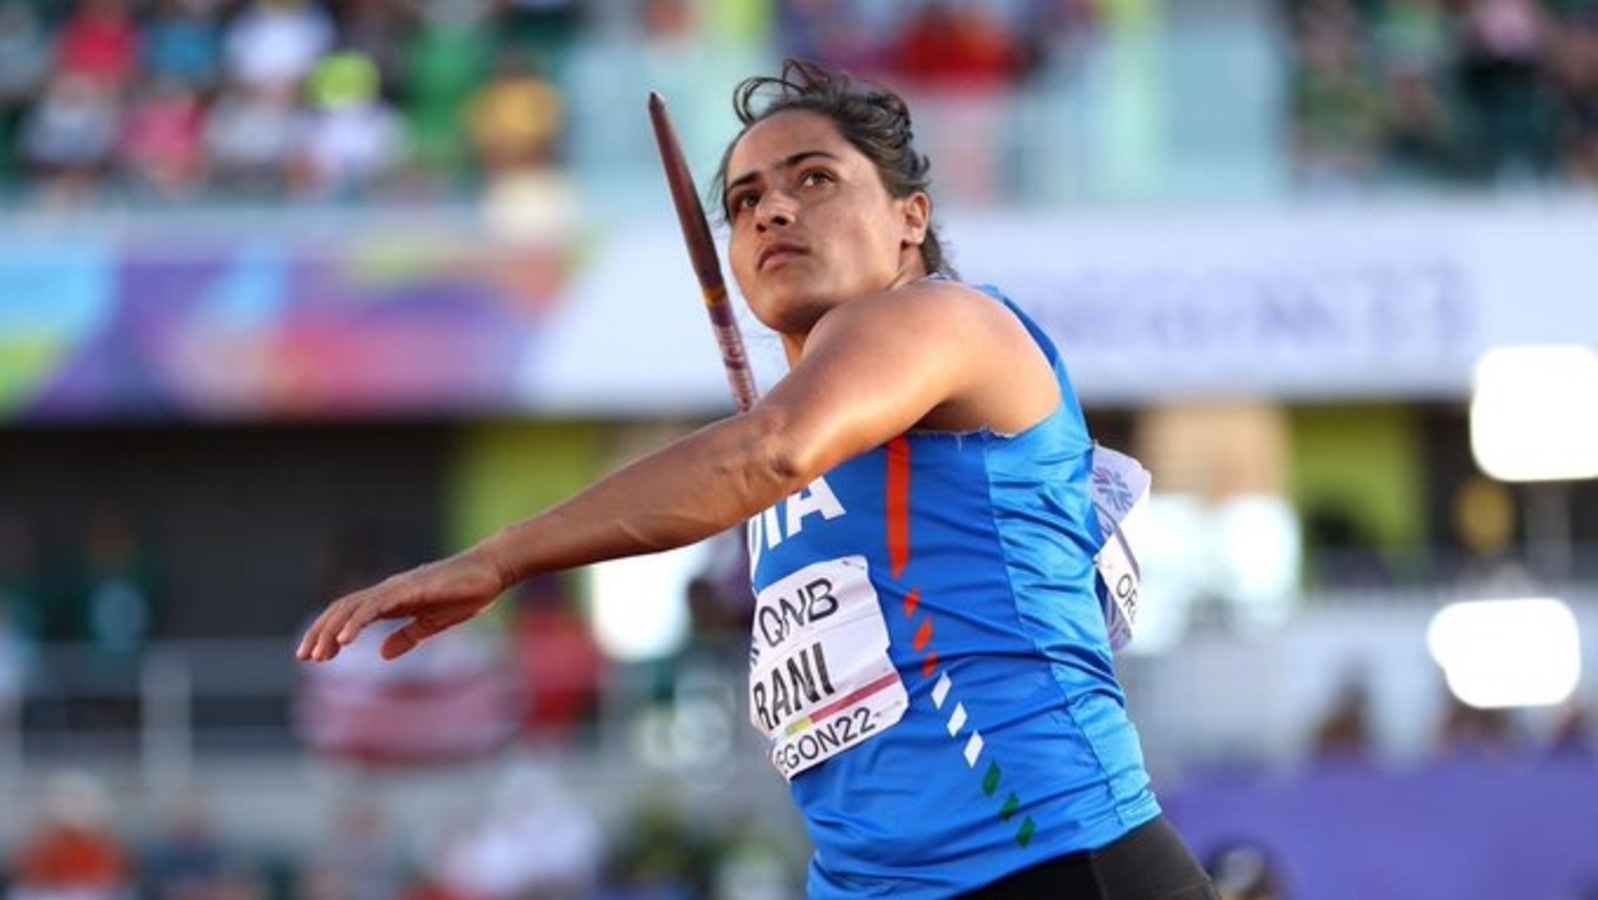 CWG 2022 Annu Rani clinches bronze in women's javelin throw